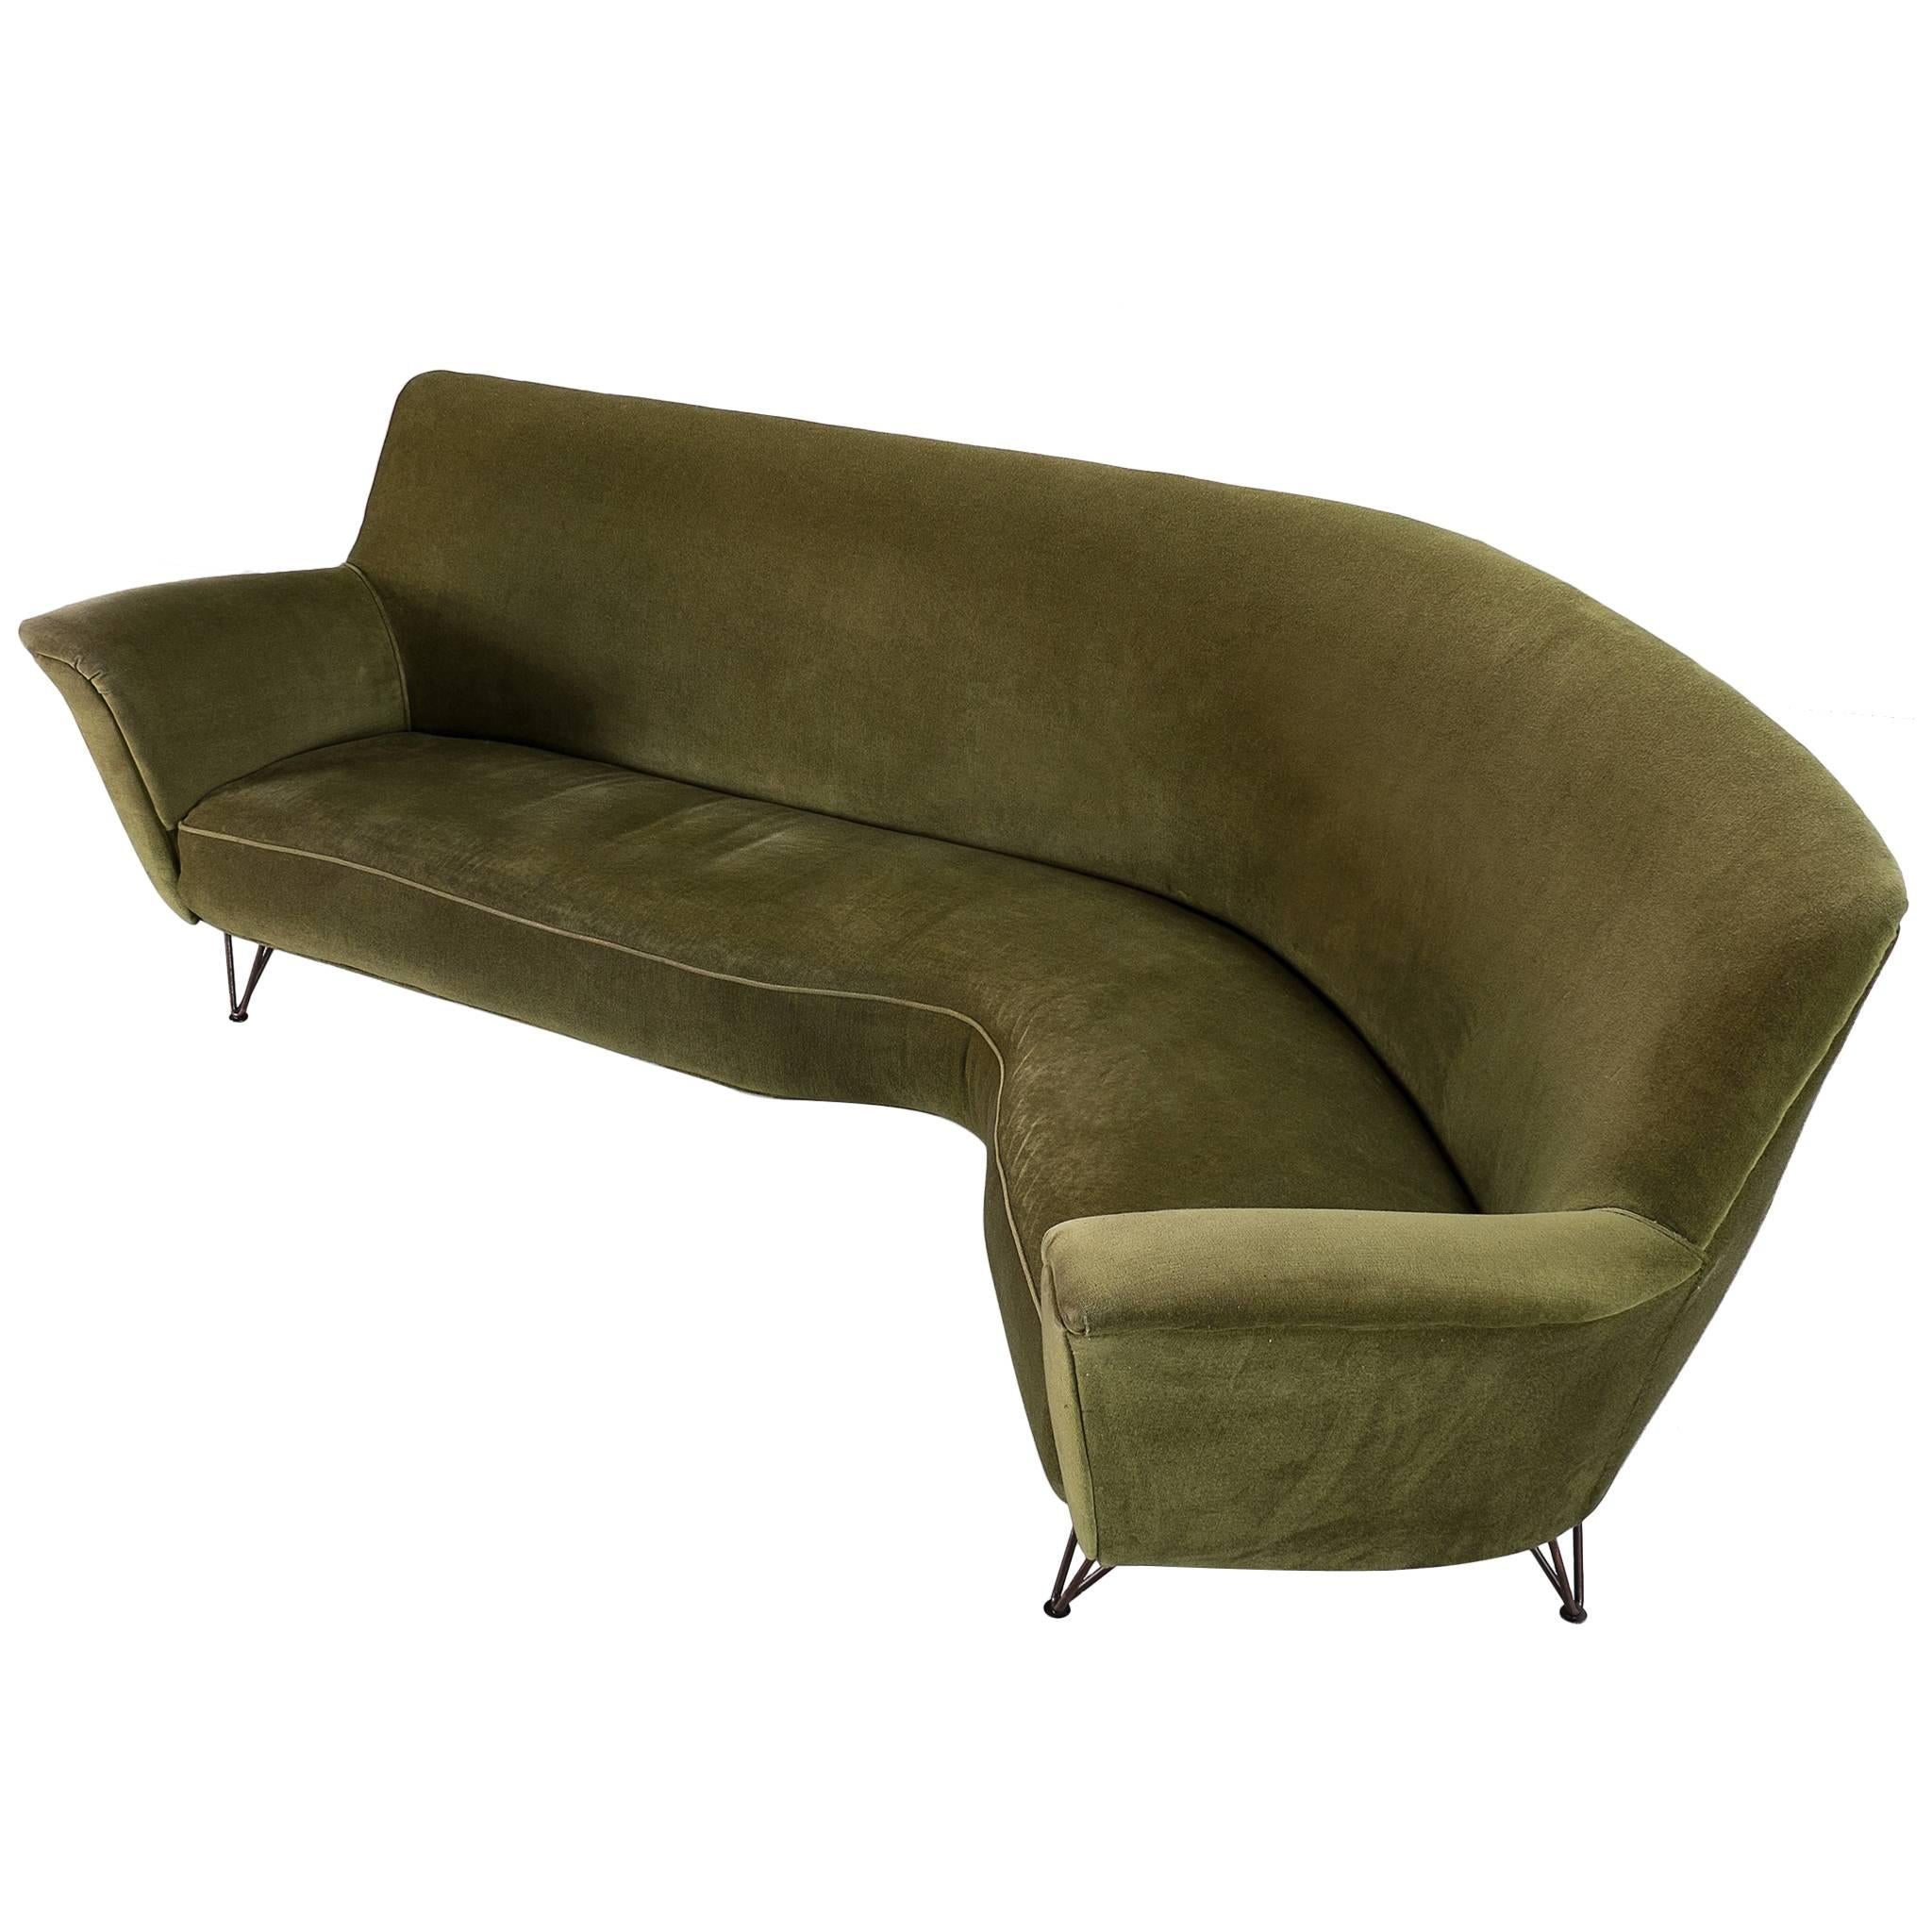 Ico Parisi Large Curved Sofa in Green Velvet